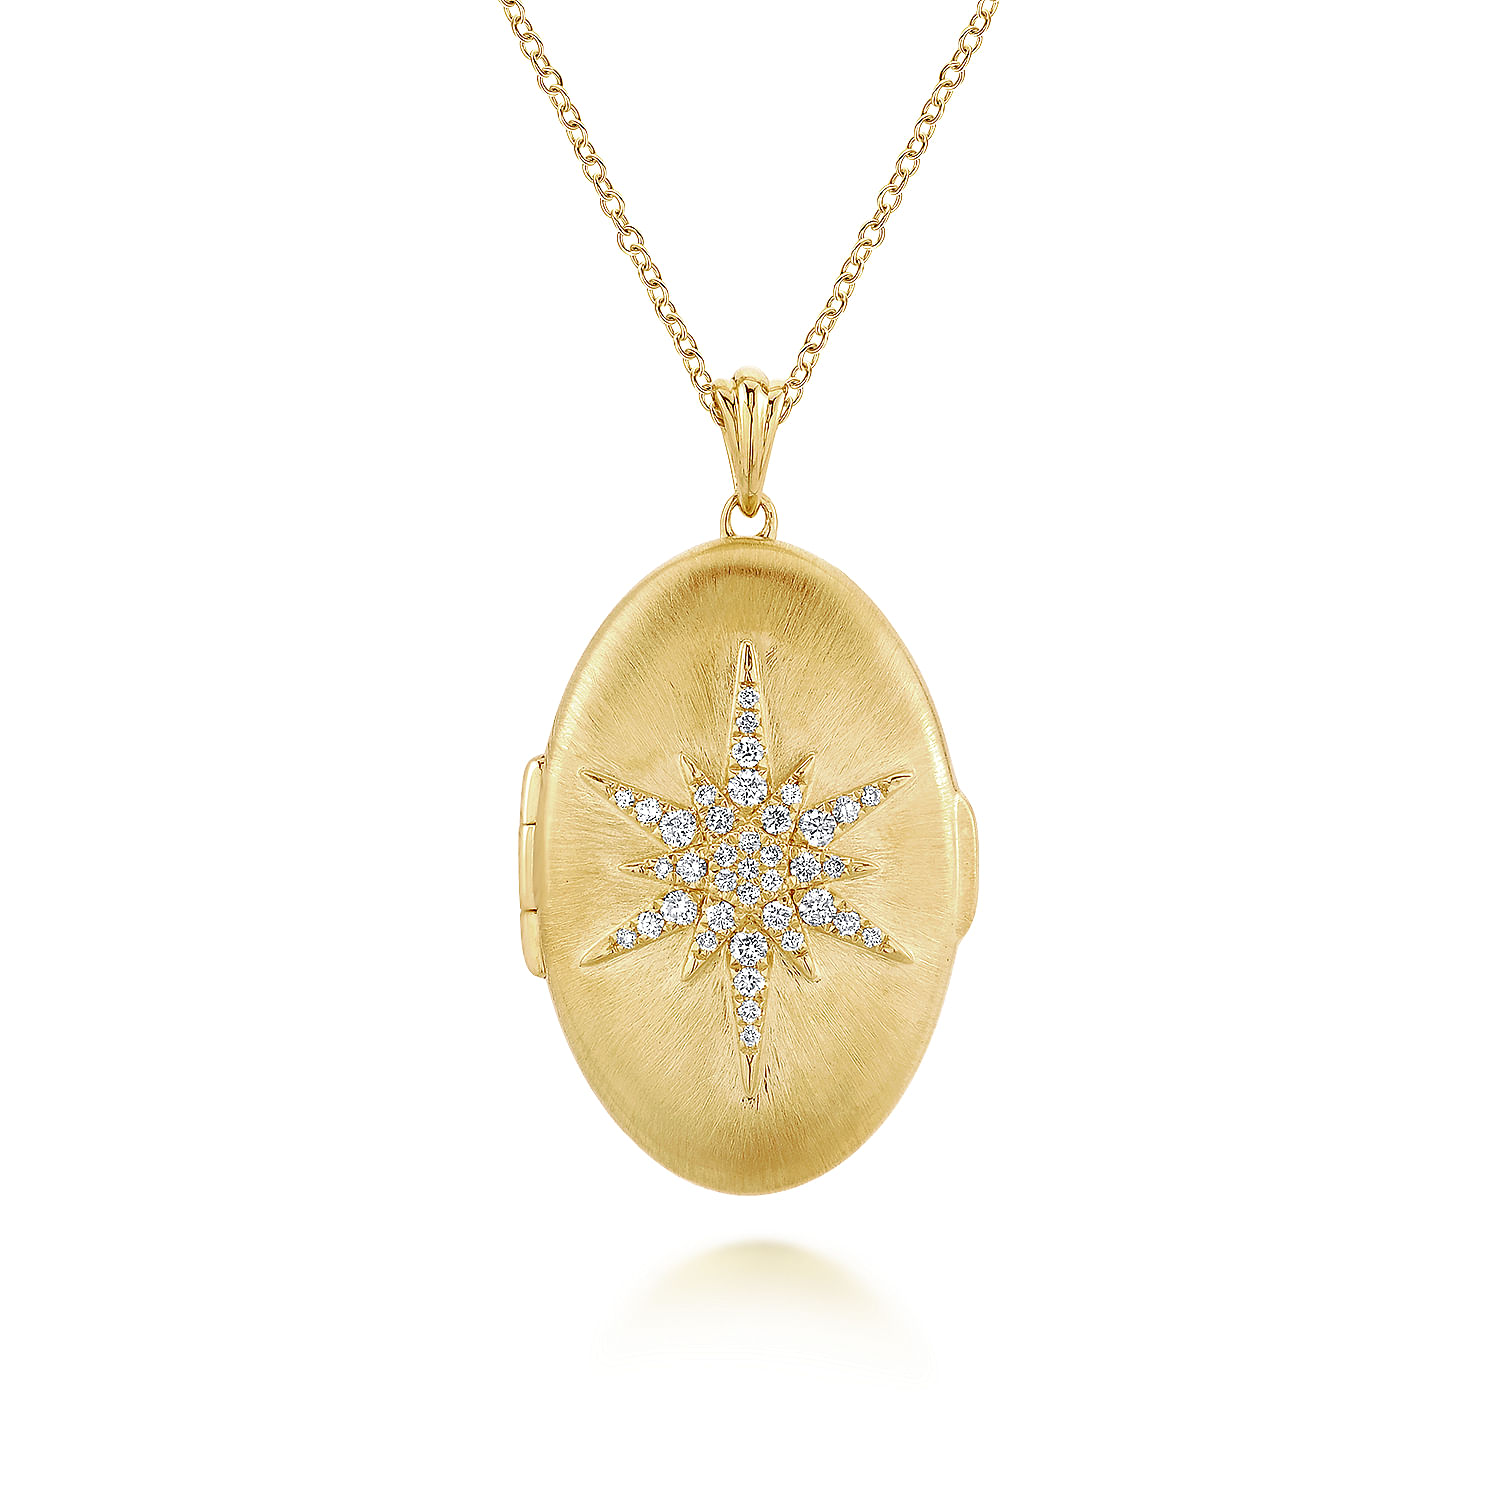 Gabriel - 25 inch 14K Yellow Gold Oval Locket Necklace with Diamond Starburst Overlay